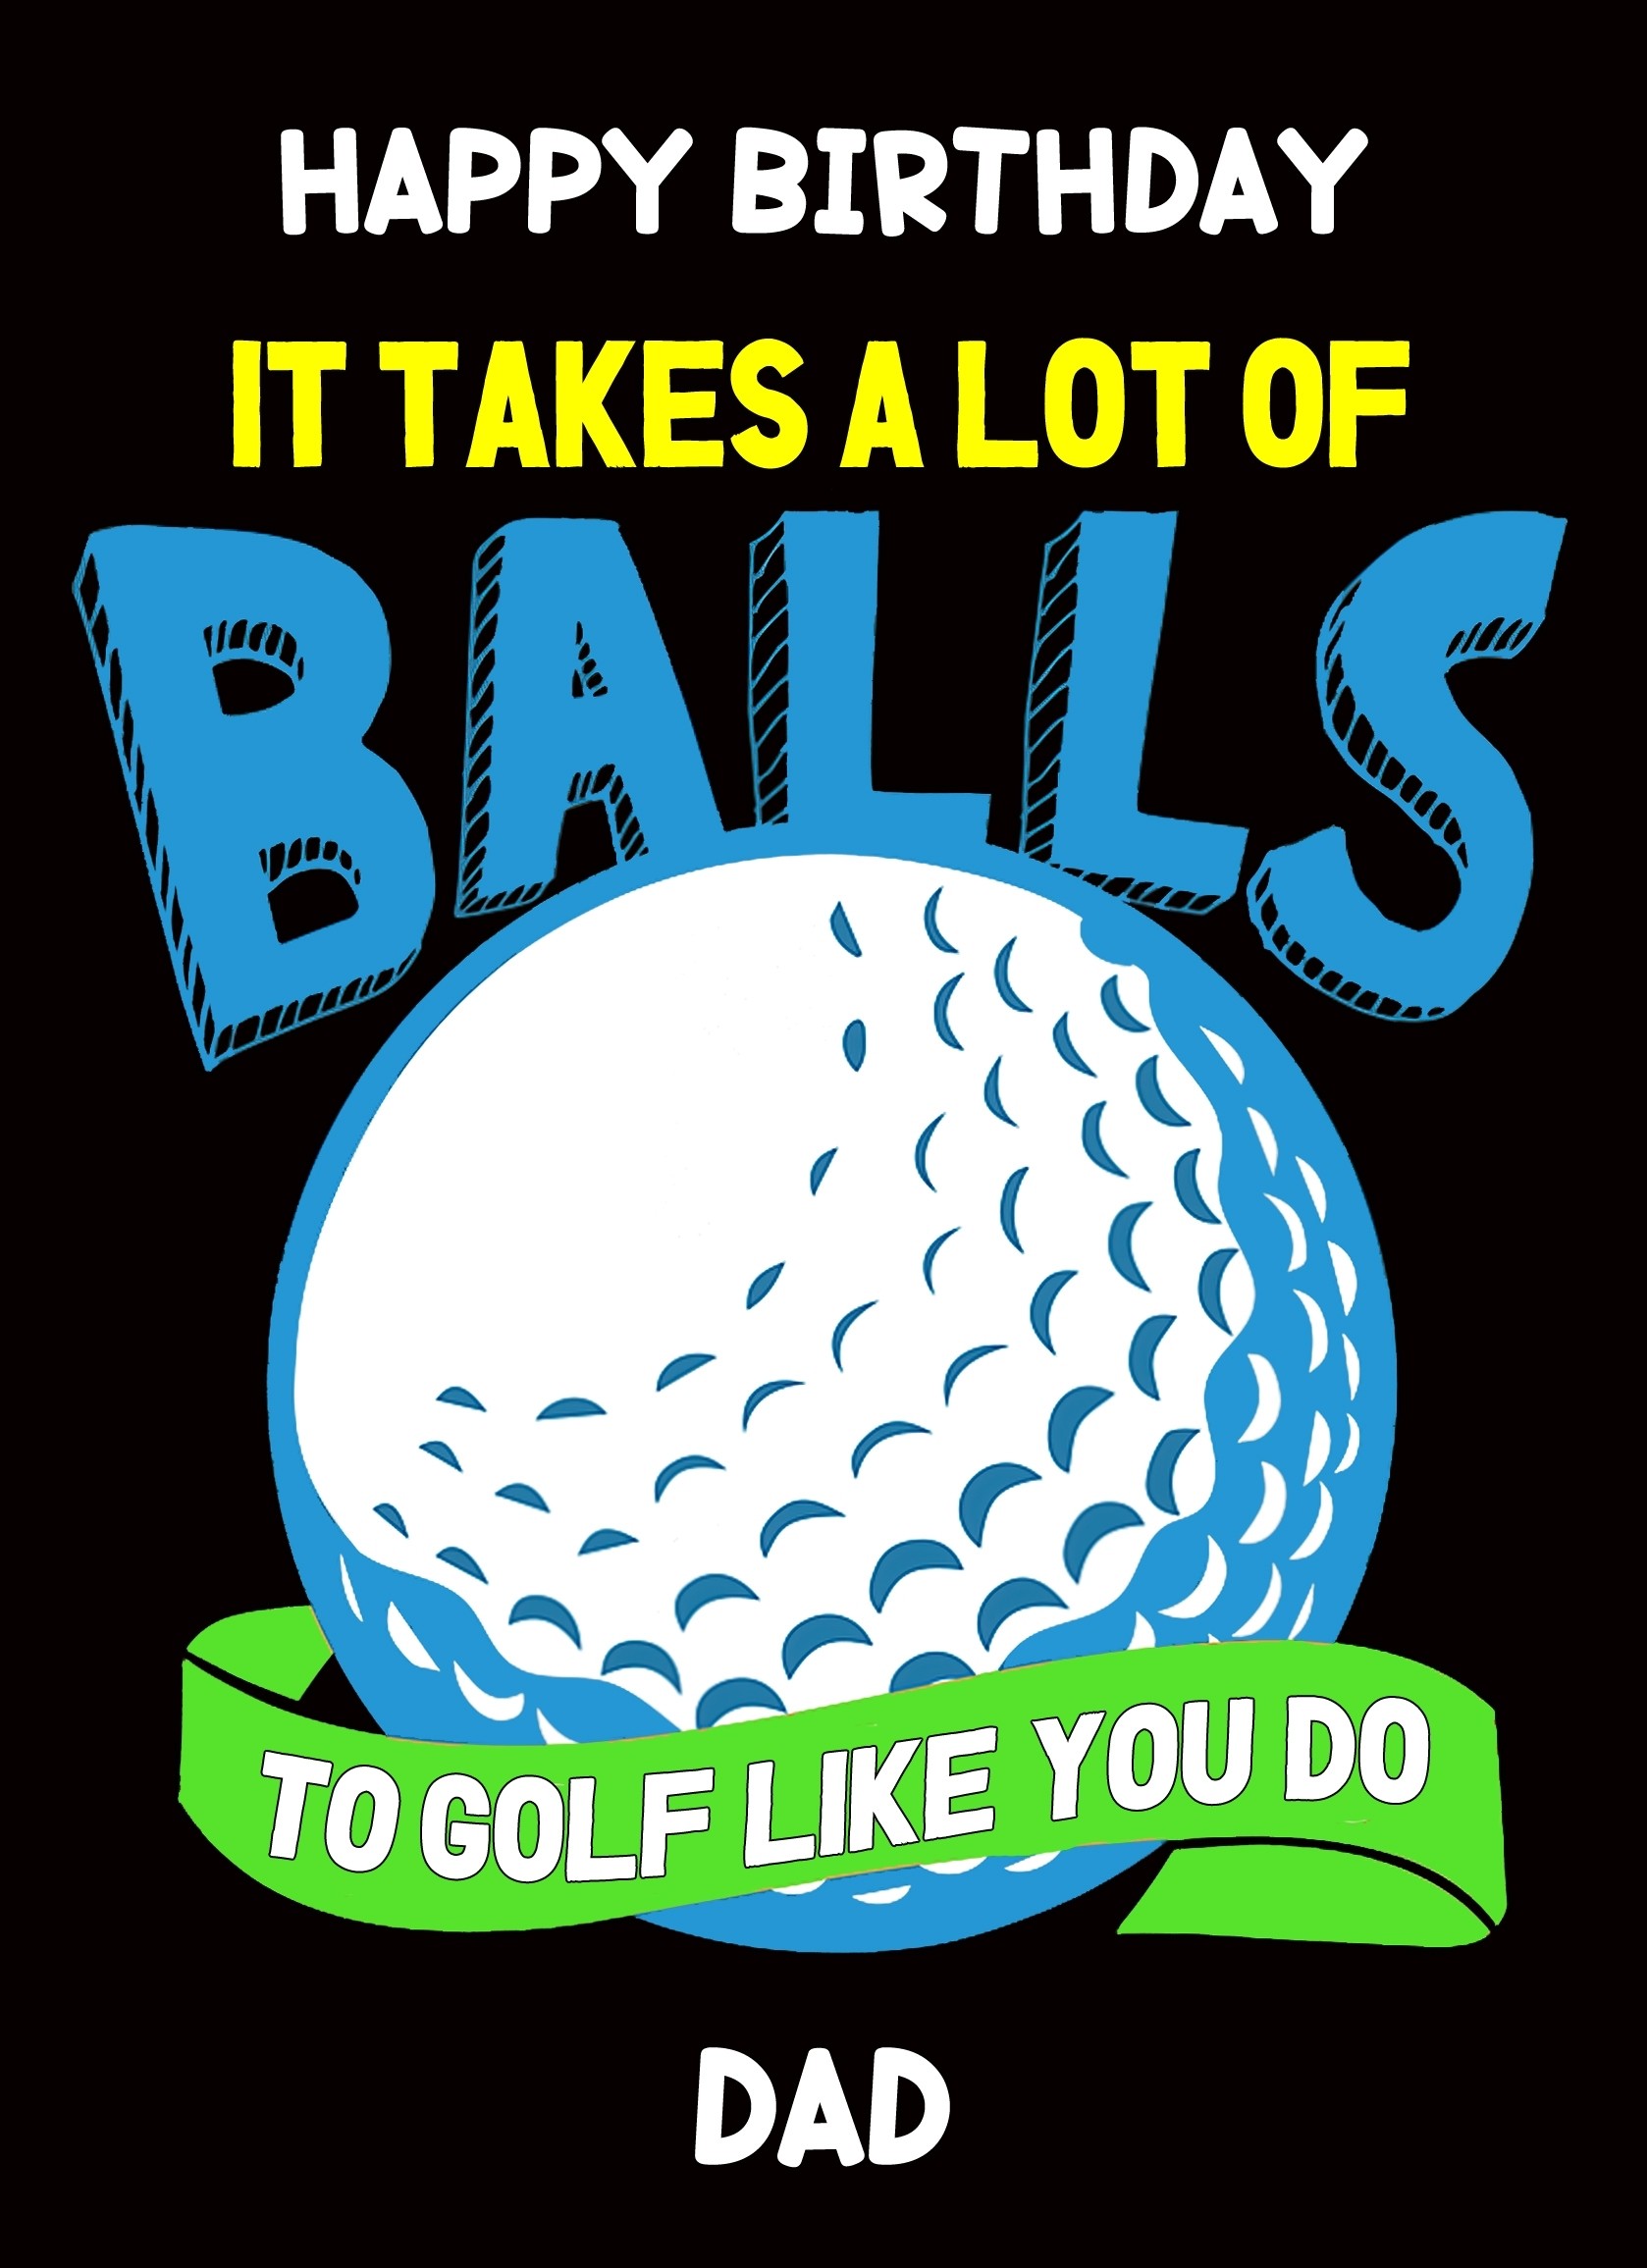 Funny Golf Birthday Card for Dad (Design 2)